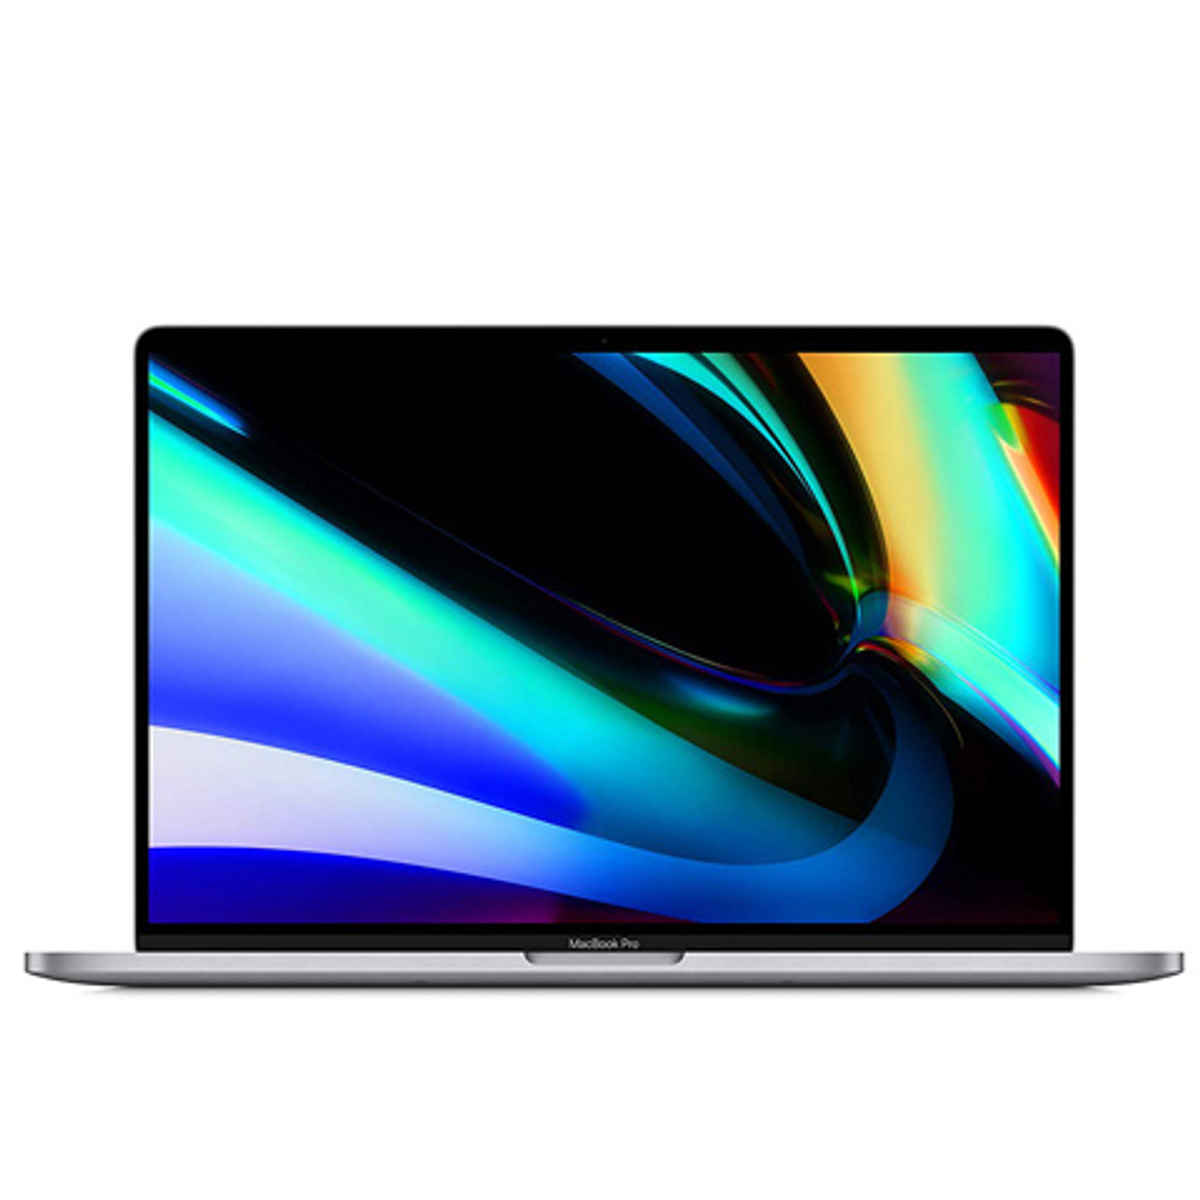 Apple MacBook Pro 16-inch Price in India, Full Specs - 7th ...